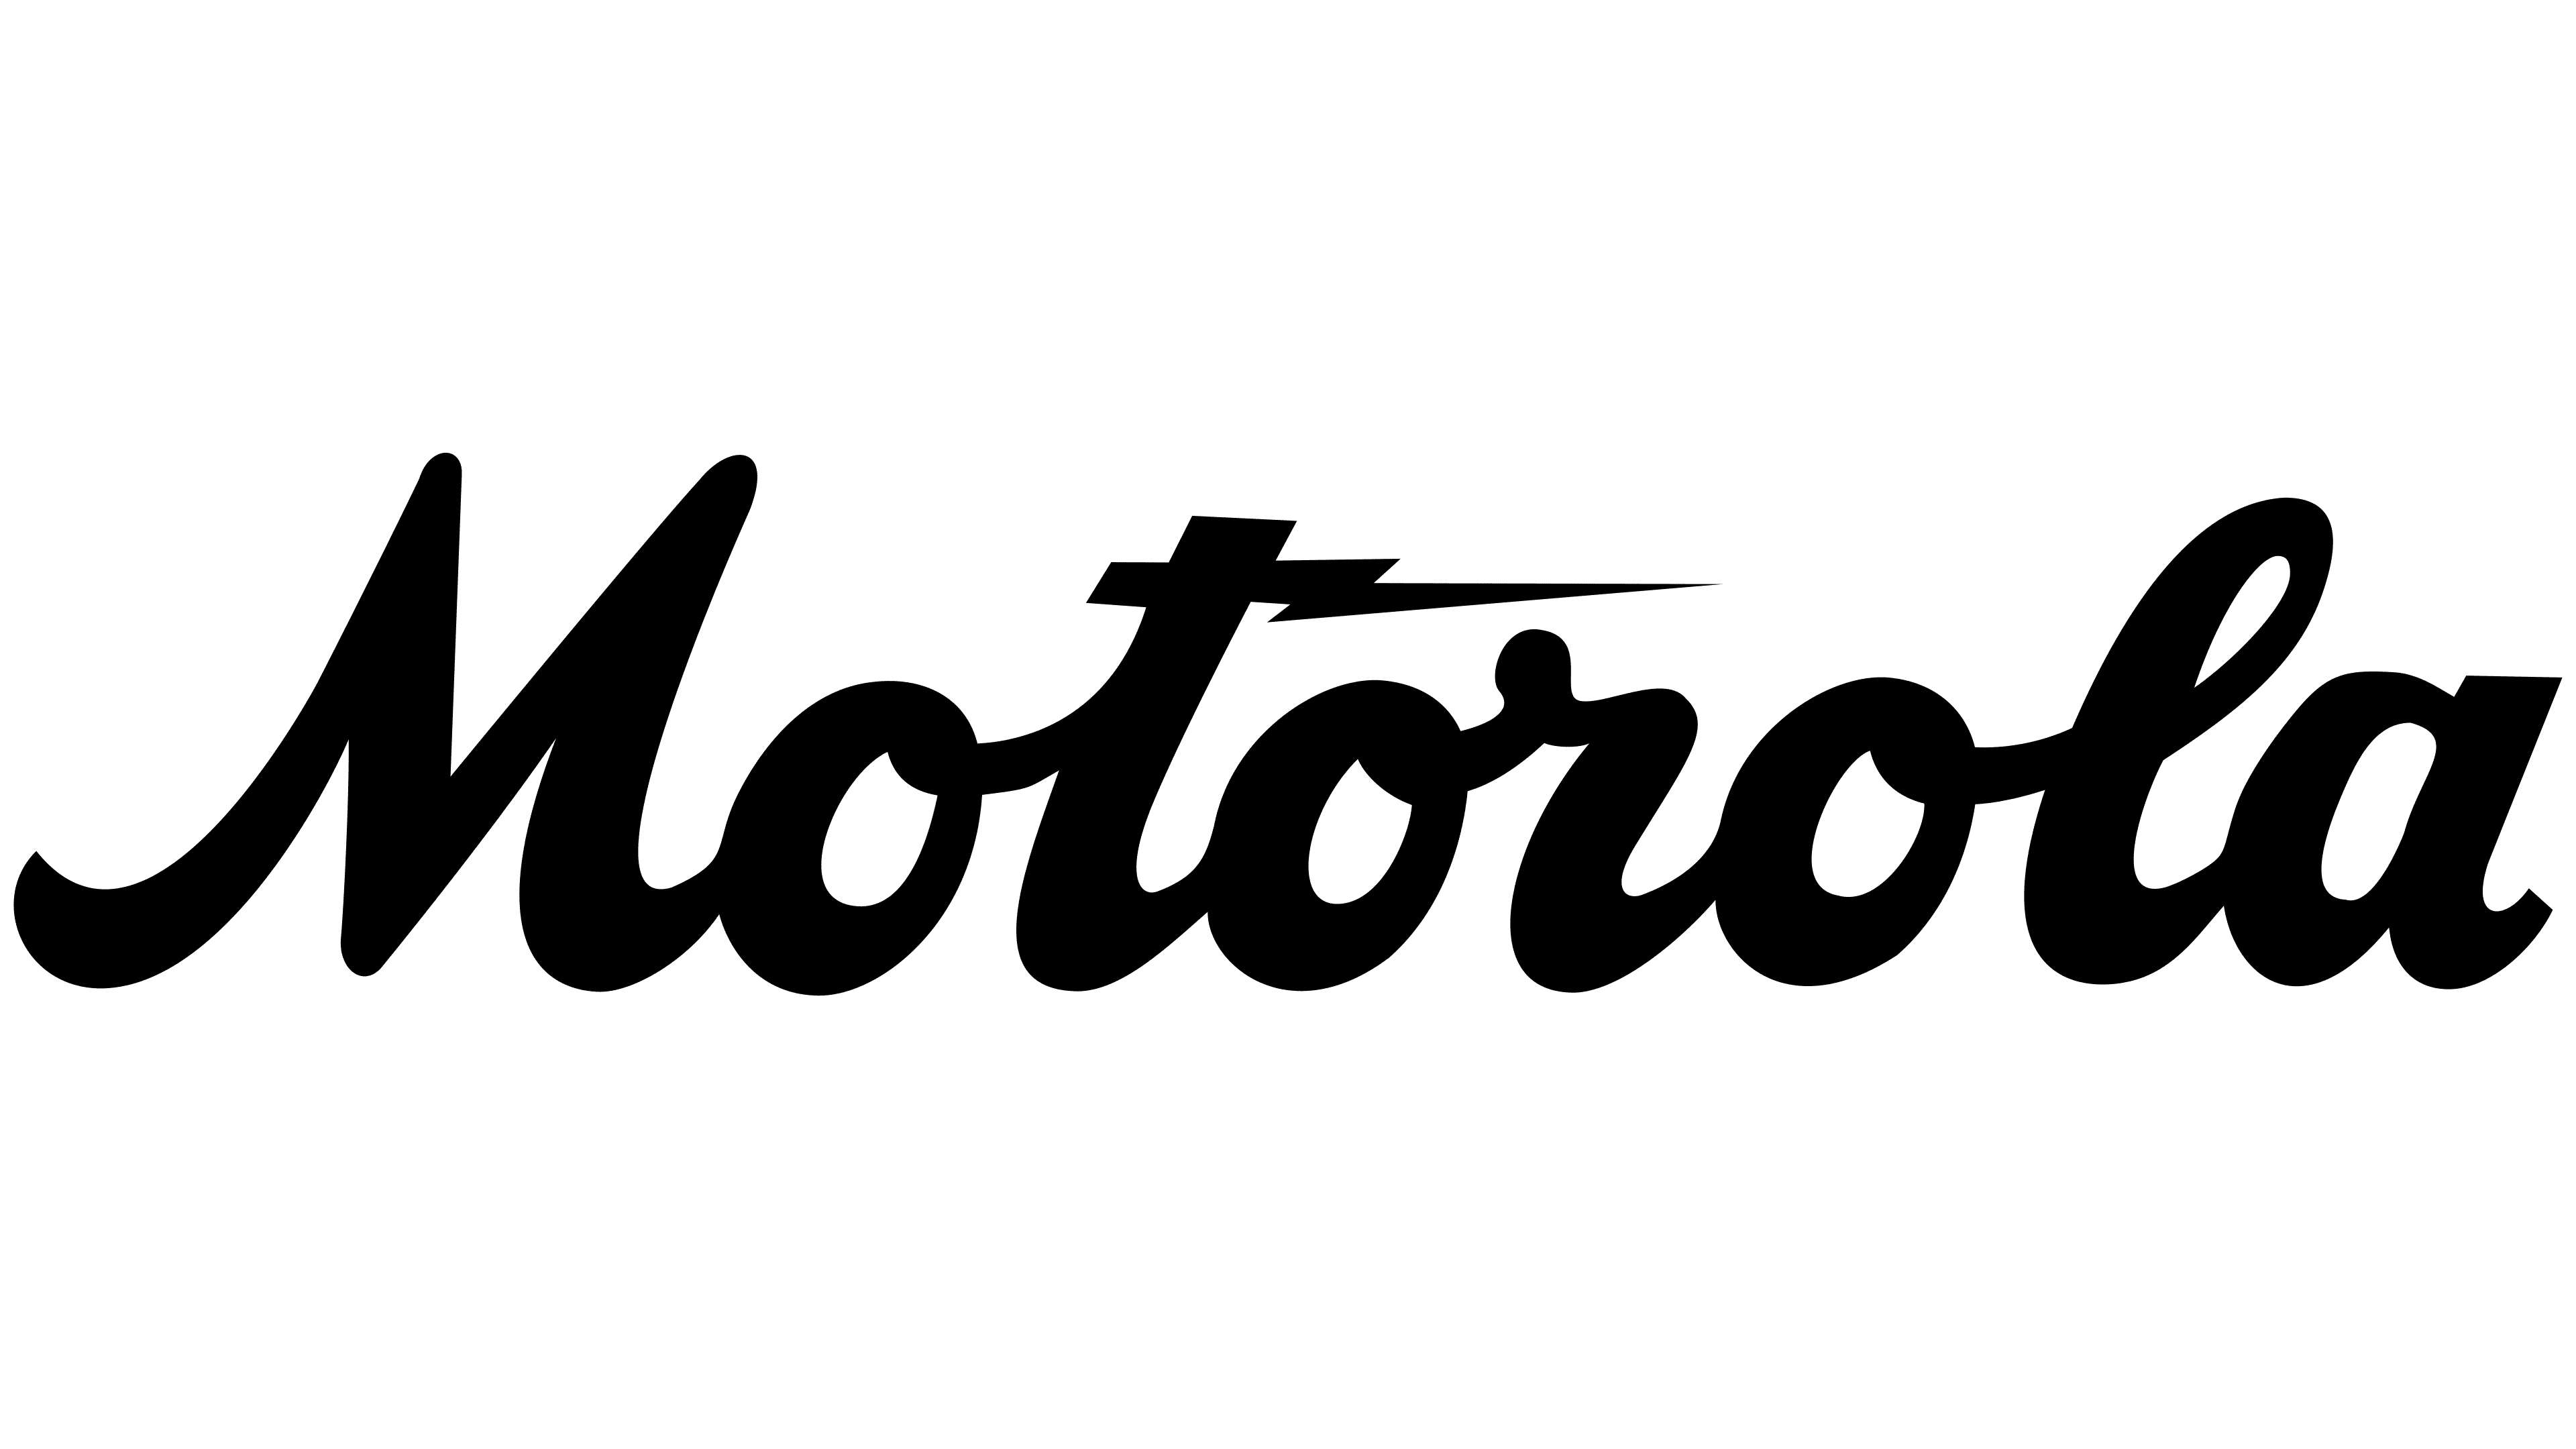 Motorola Brand Animated GIF Logo Designs